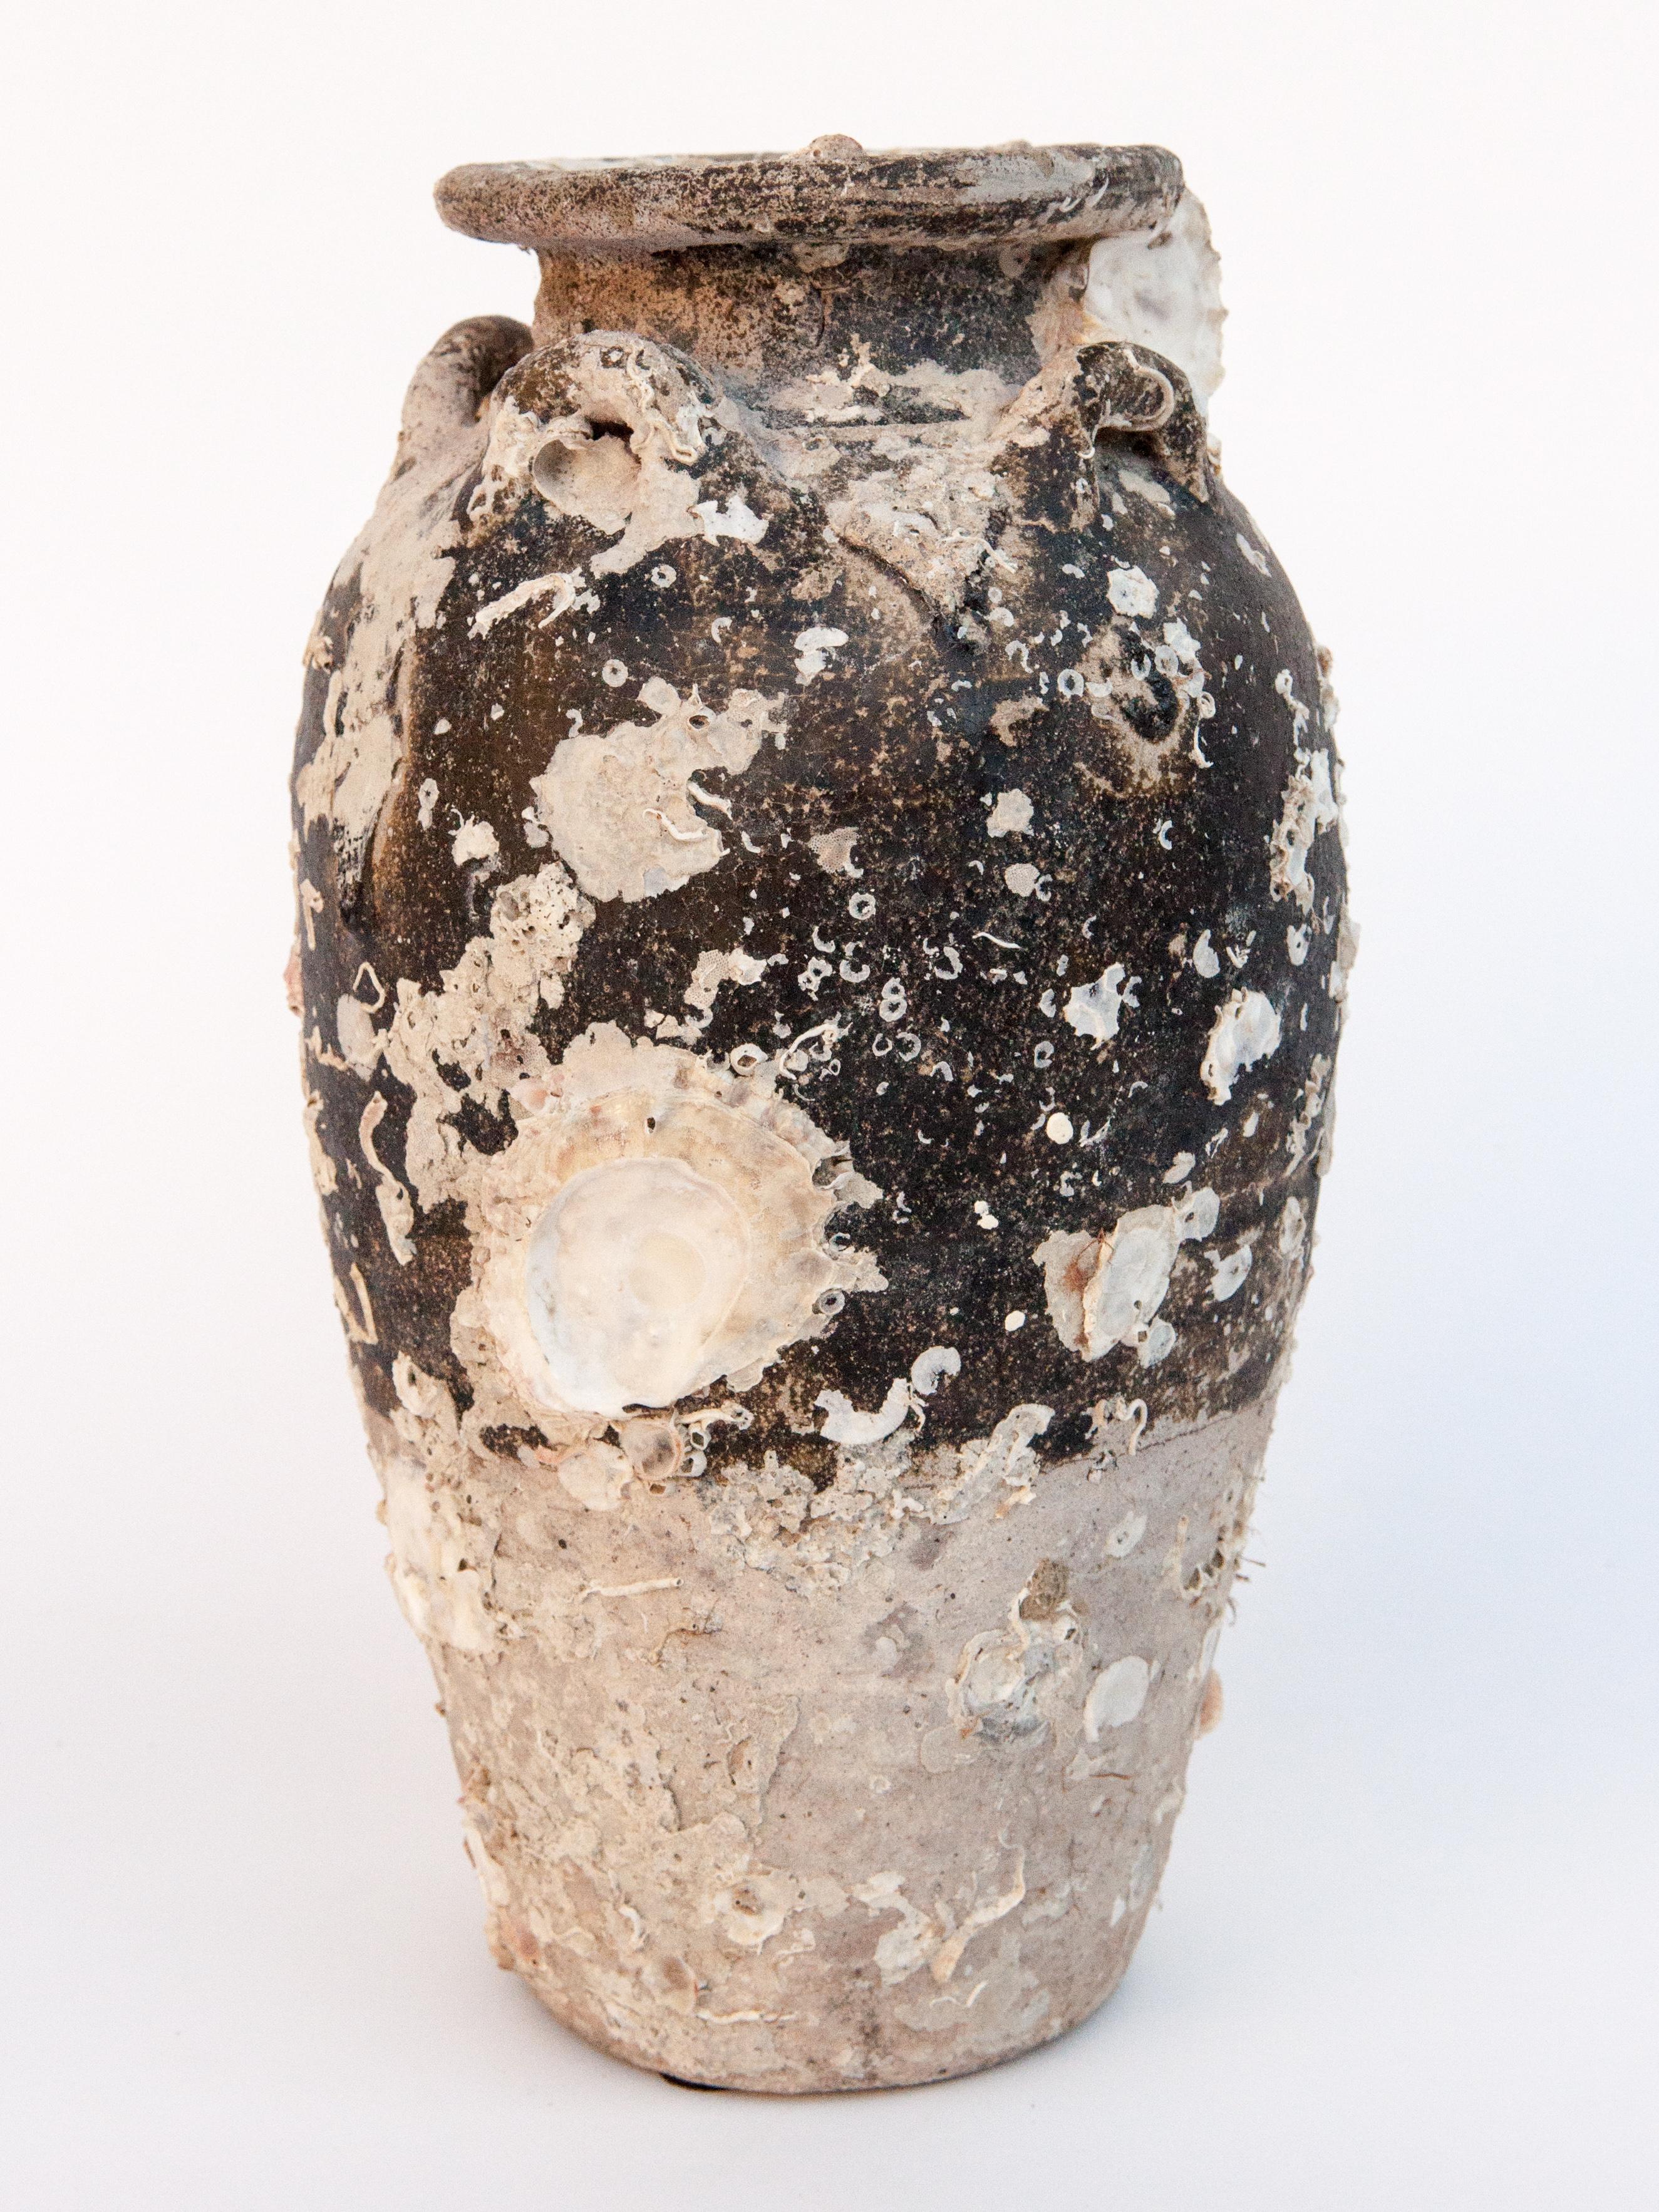 Antique Sawankhalok Jar with Encrustations. Sawankhalok, Thailand, 15th century.
This jar originates from the kilns of central Thailand centered around the area of Si Sachanalai dating to the Sukhothai period. Sawankhalok ceramics were widely